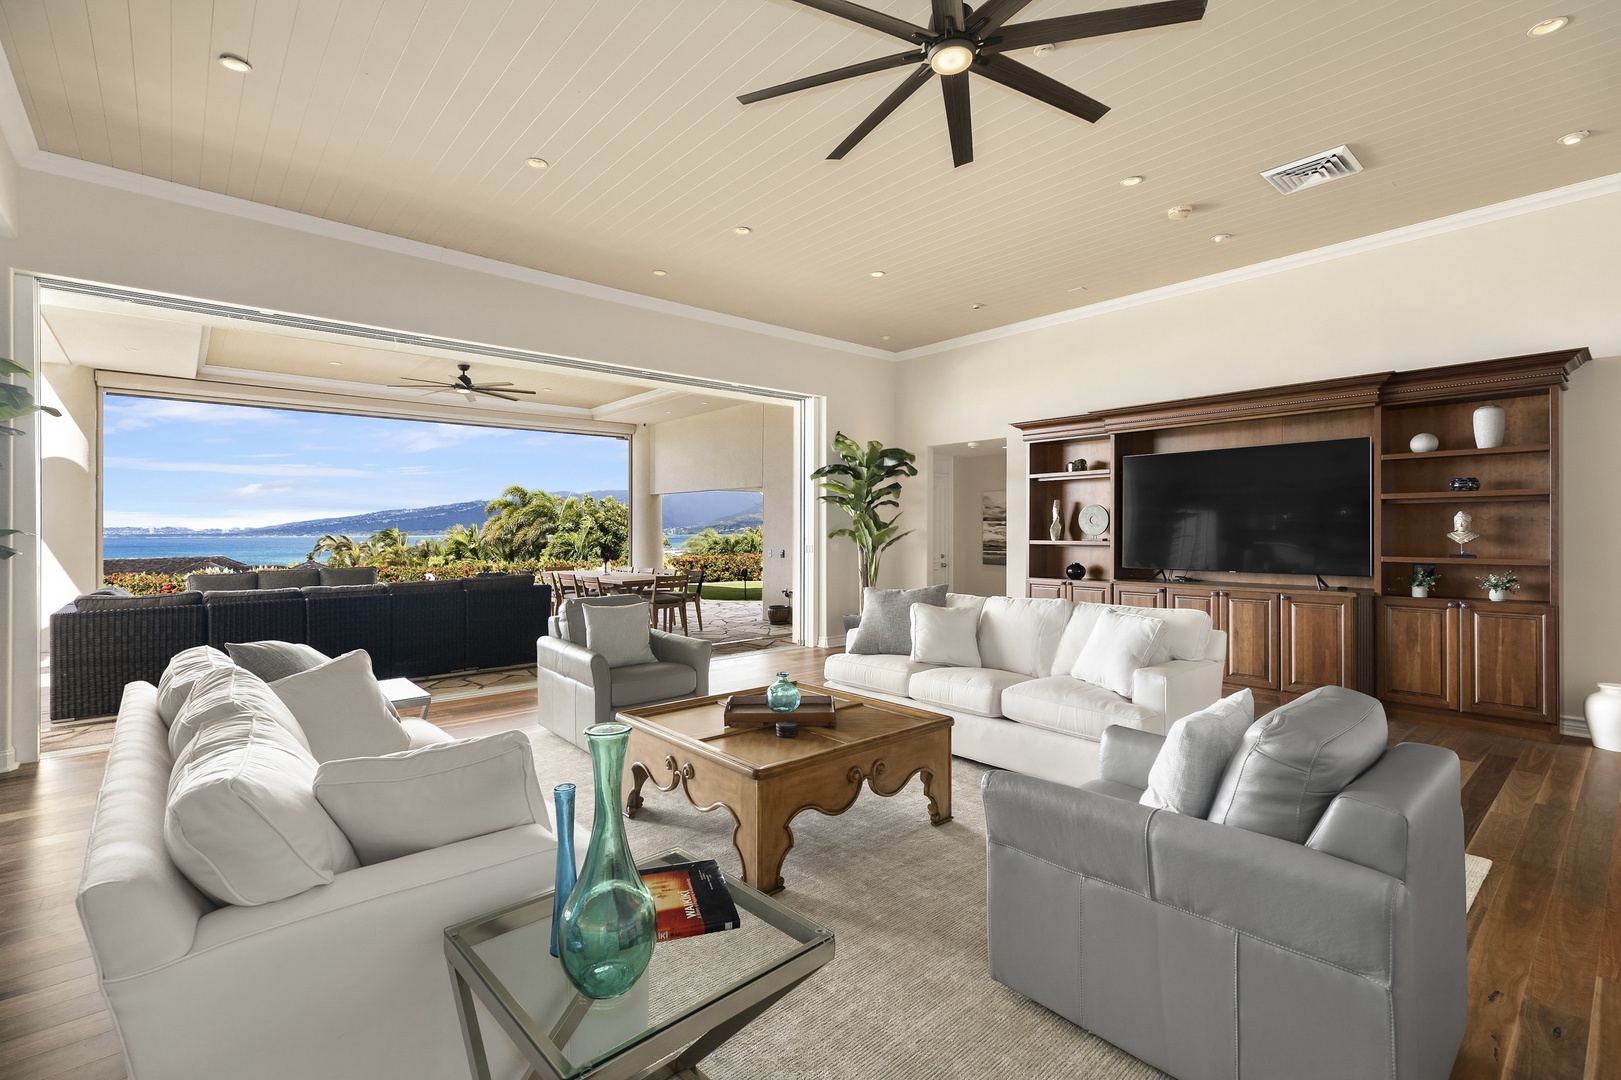 Honolulu Vacation Rentals, Hale Makana - Enjoy the comfort of the living room